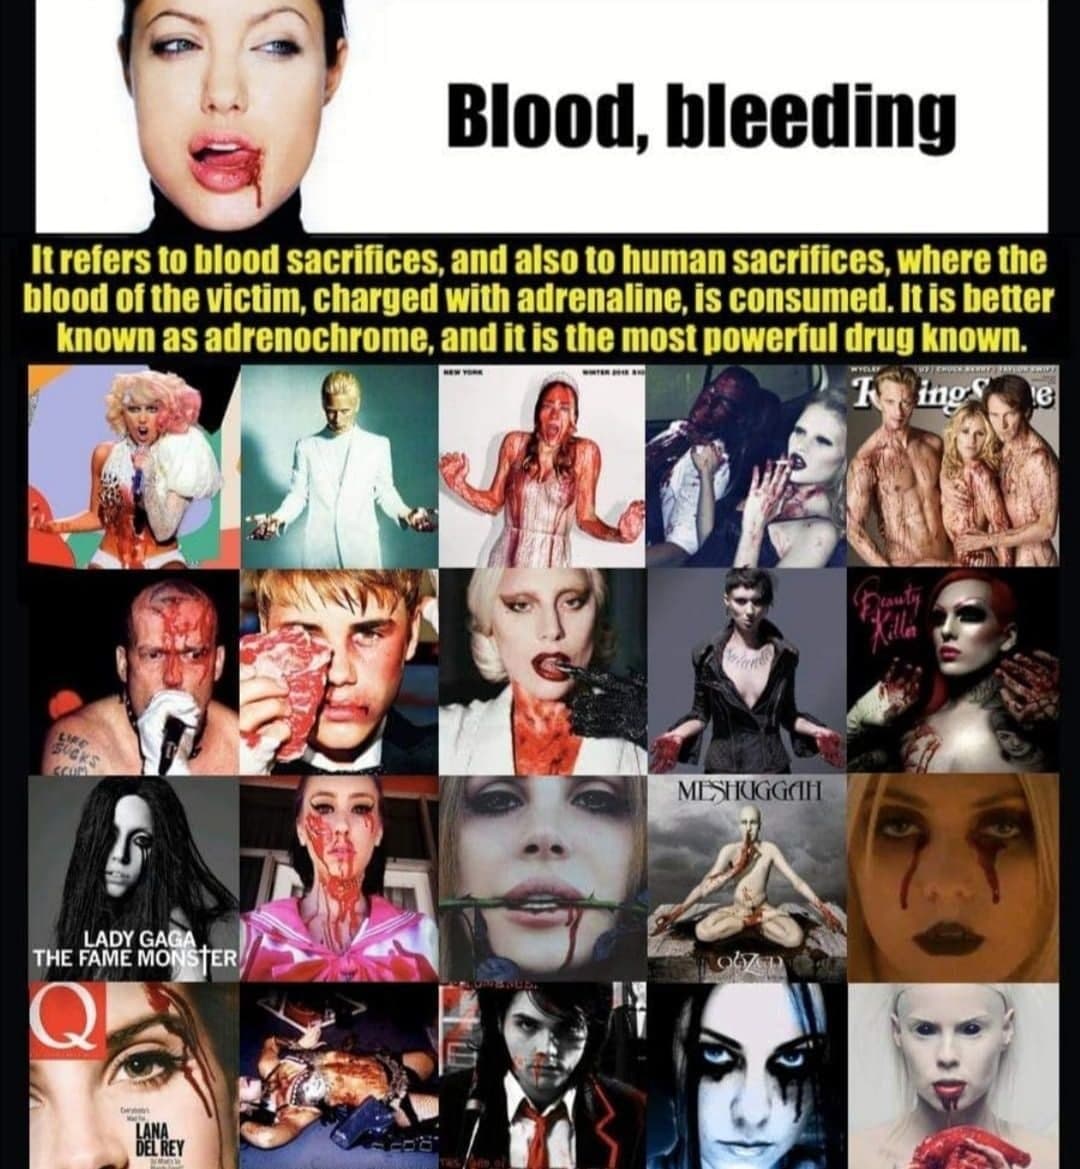 satanic handsigns bloodandbleeding